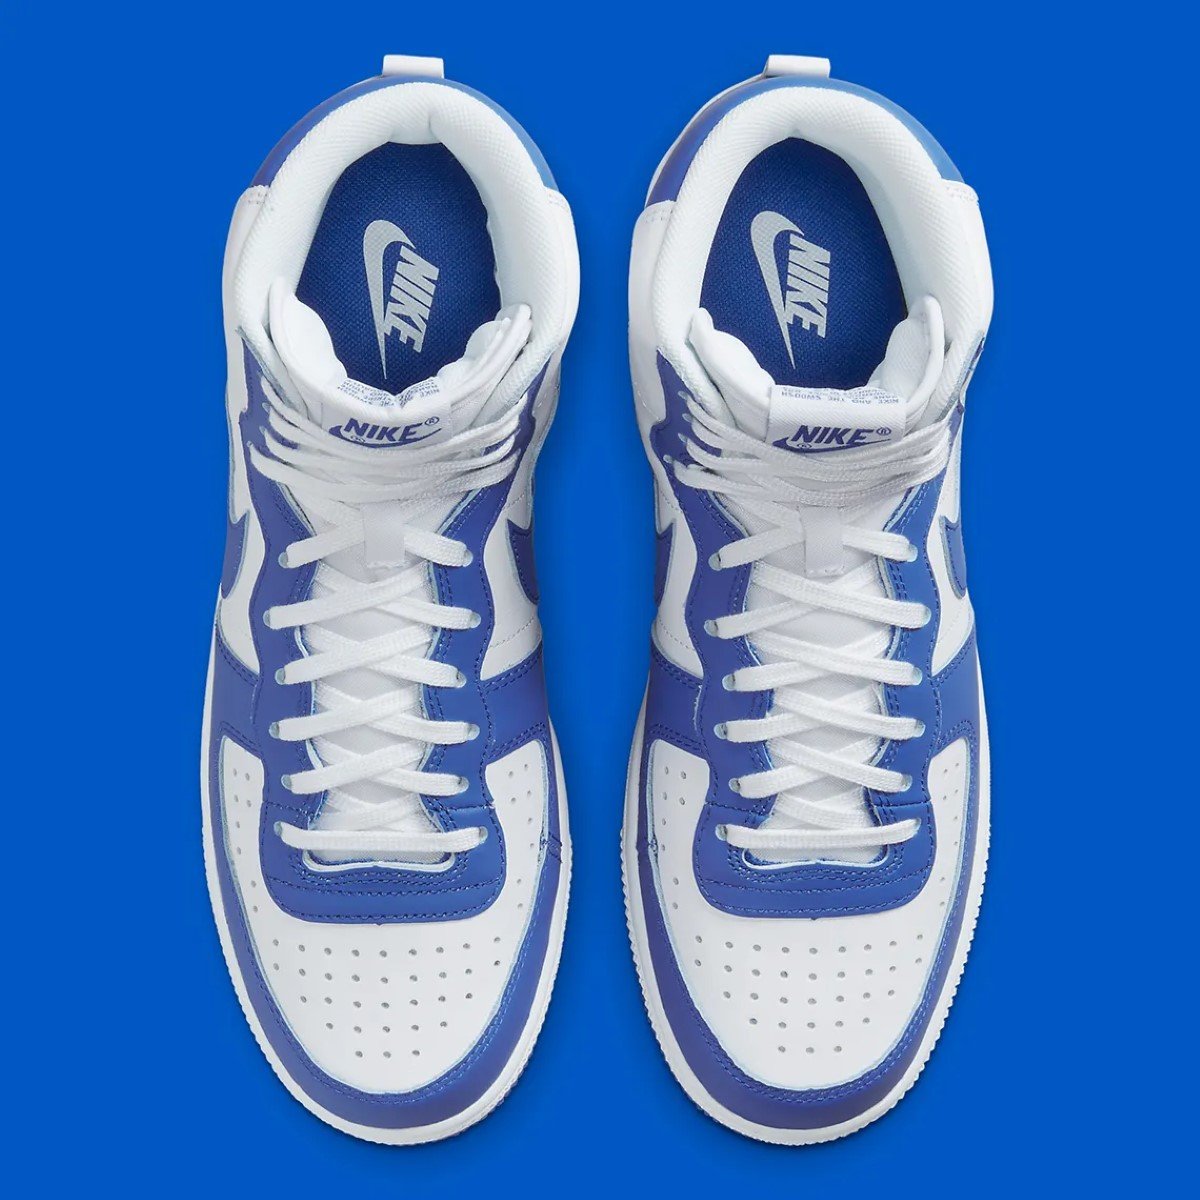 Nike Terminator High "Kentucky Blue"